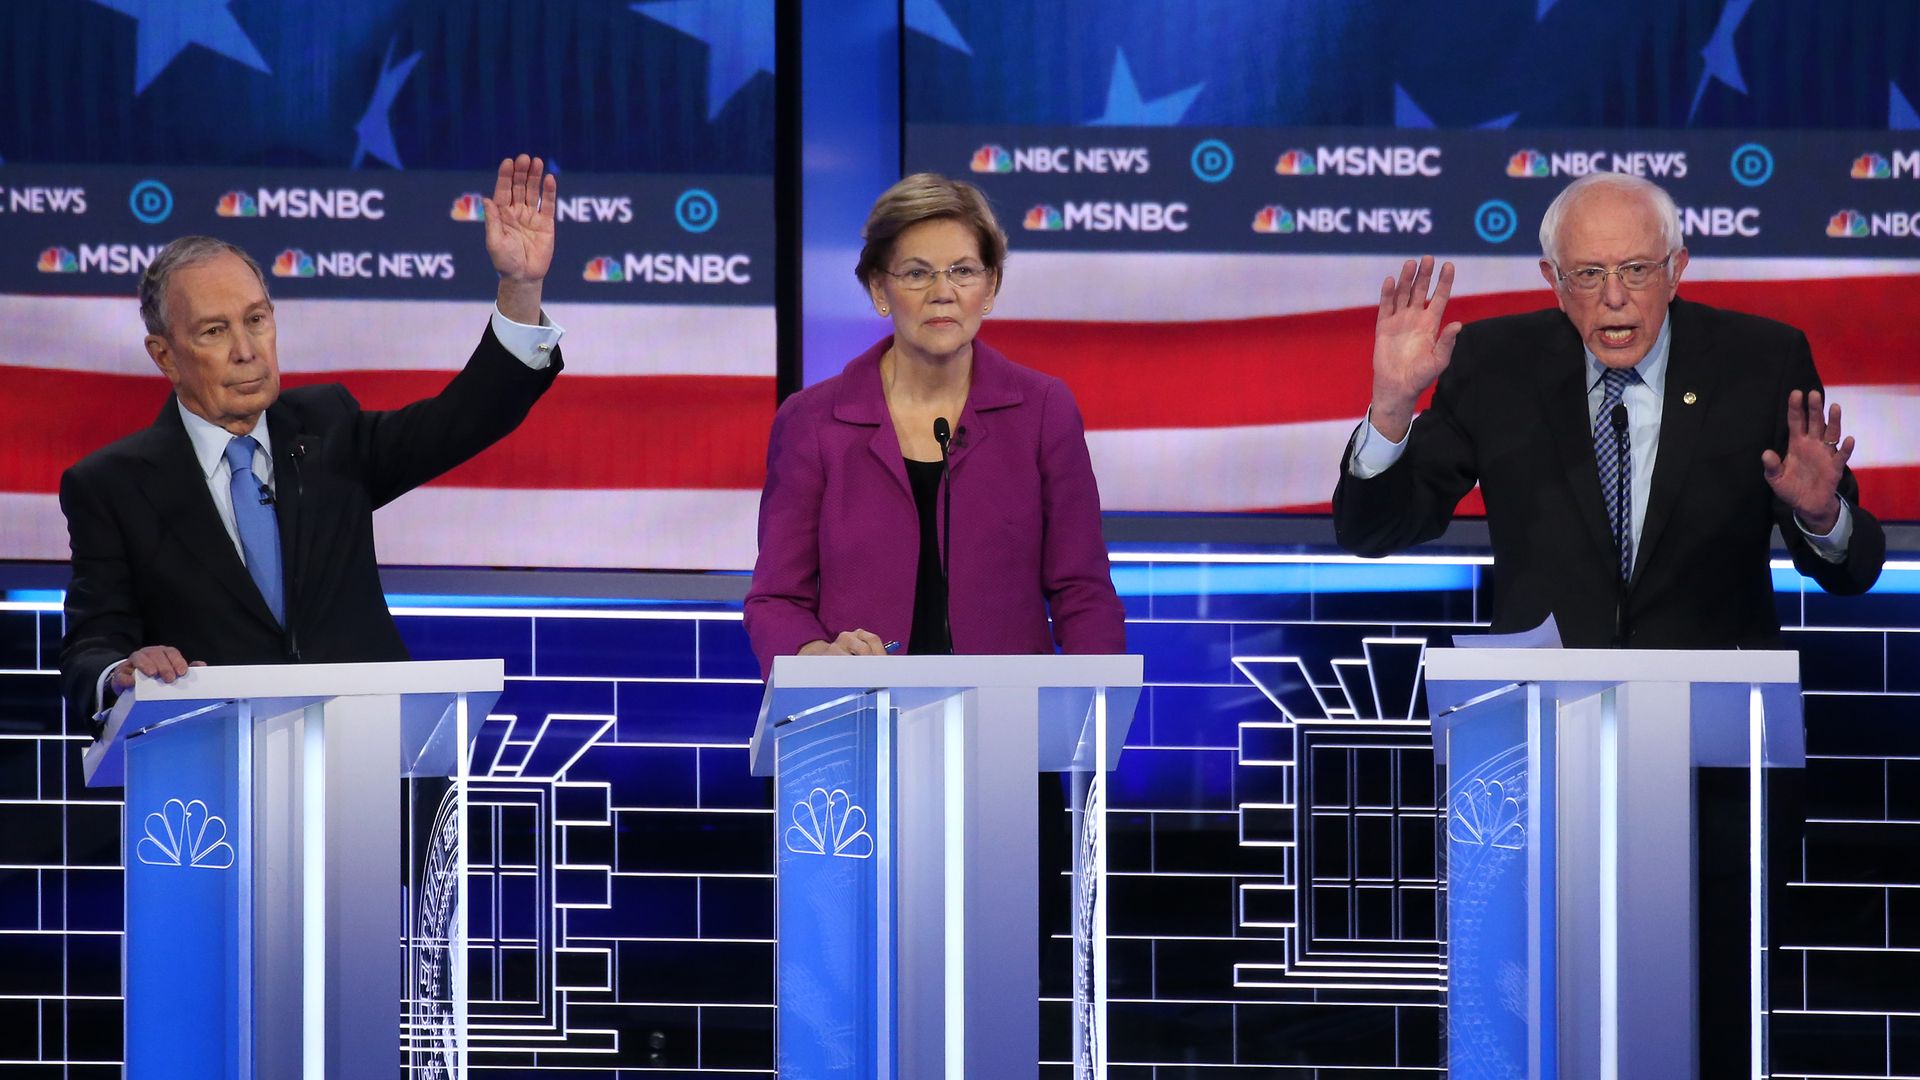 Bernie Sanders gestures while Mike Bloomberg raises his hand at the Democratic Las Vegas debate